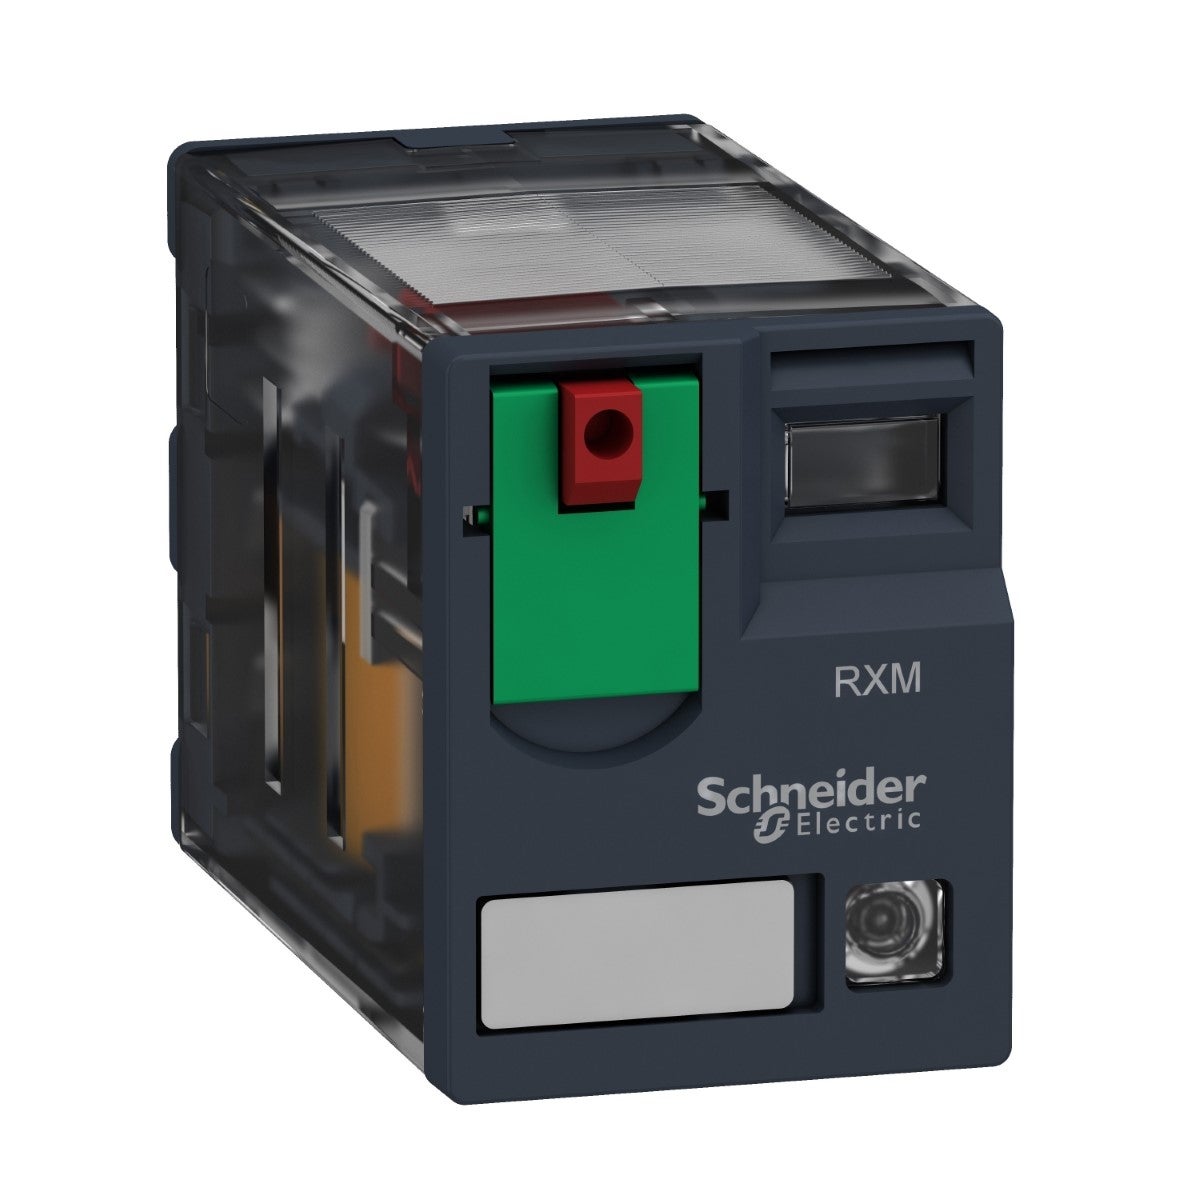 Schneider Electric Miniature Plug-in relay - Zelio RXM 4 C/O 24 V AC 6 A with LED